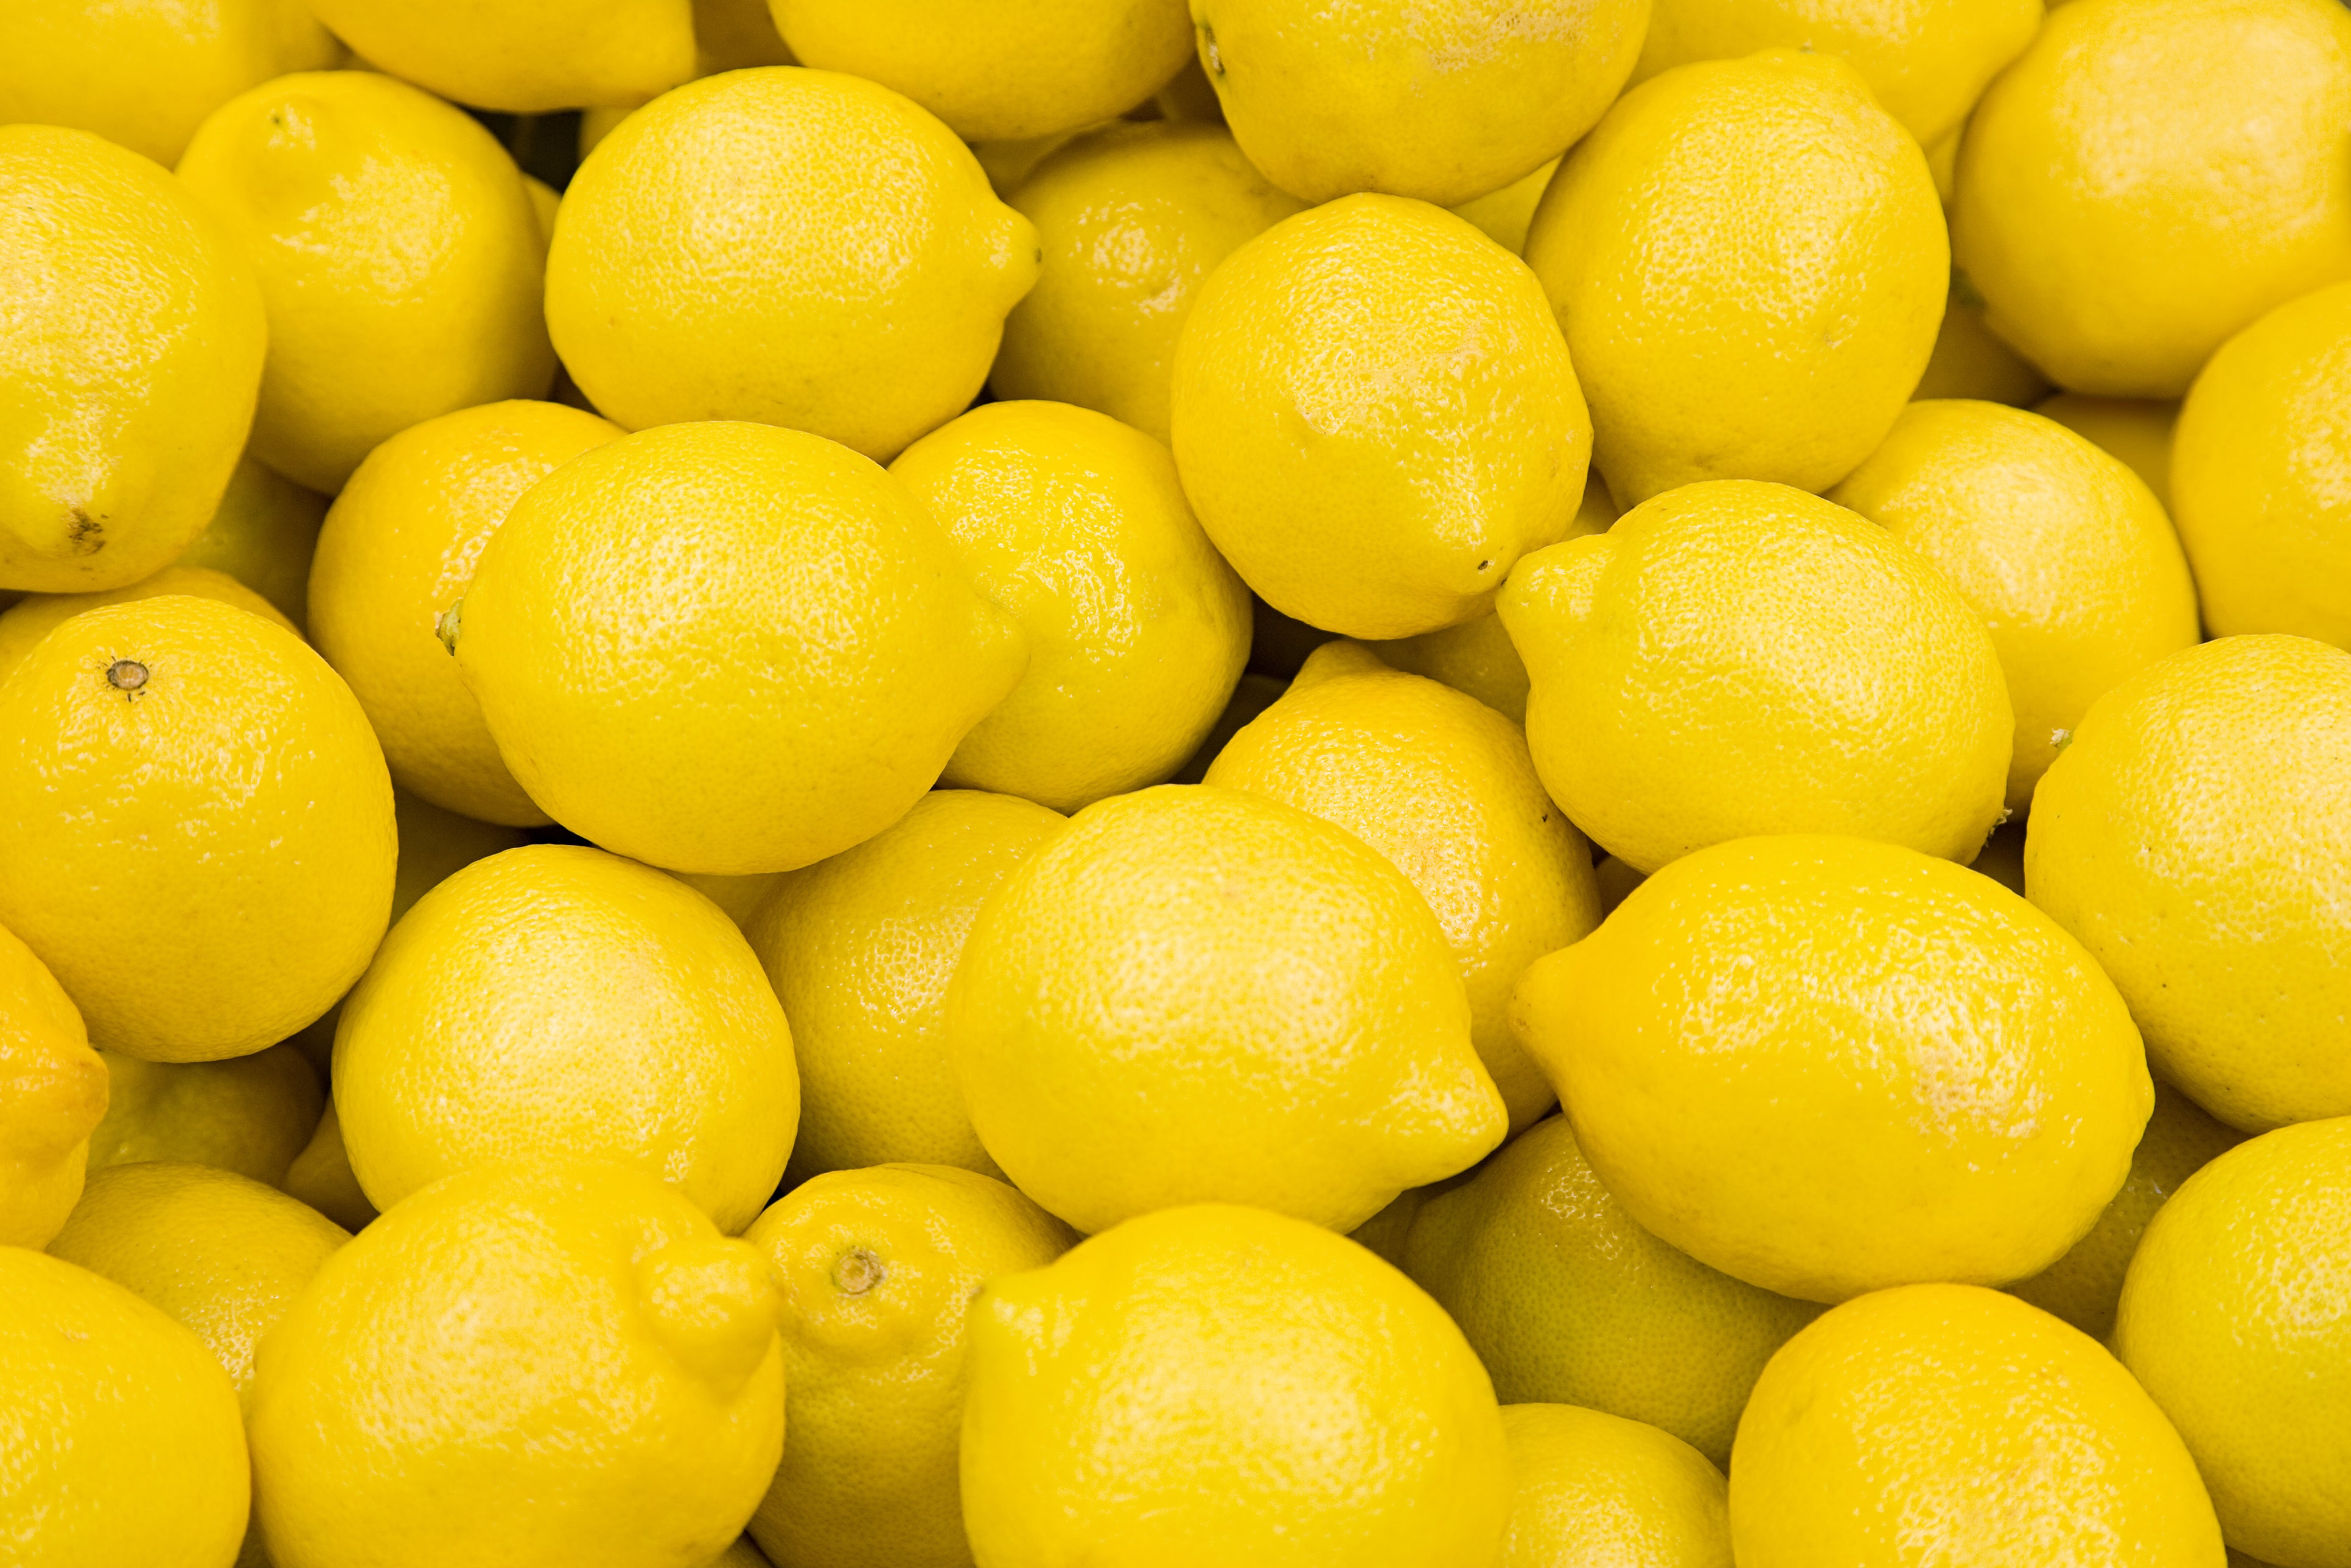 Who knew lemons were so versatile?